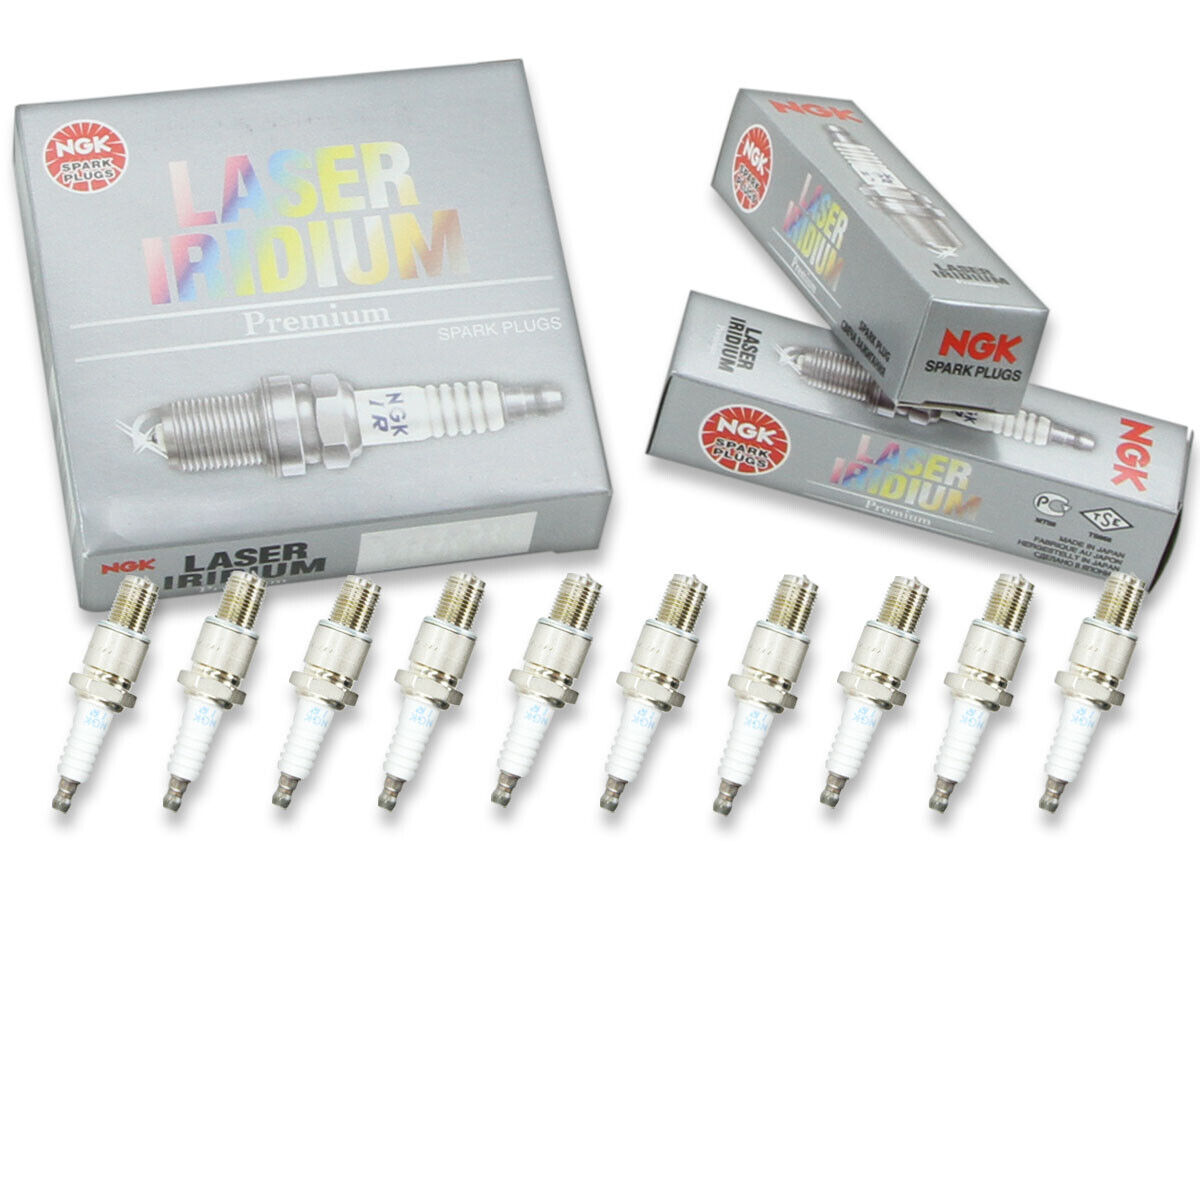 10 pc NGK 6701 RE9B-T Laser Iridium Spark Plugs for N3Y4-18-110A N3Y4-18-110 ql